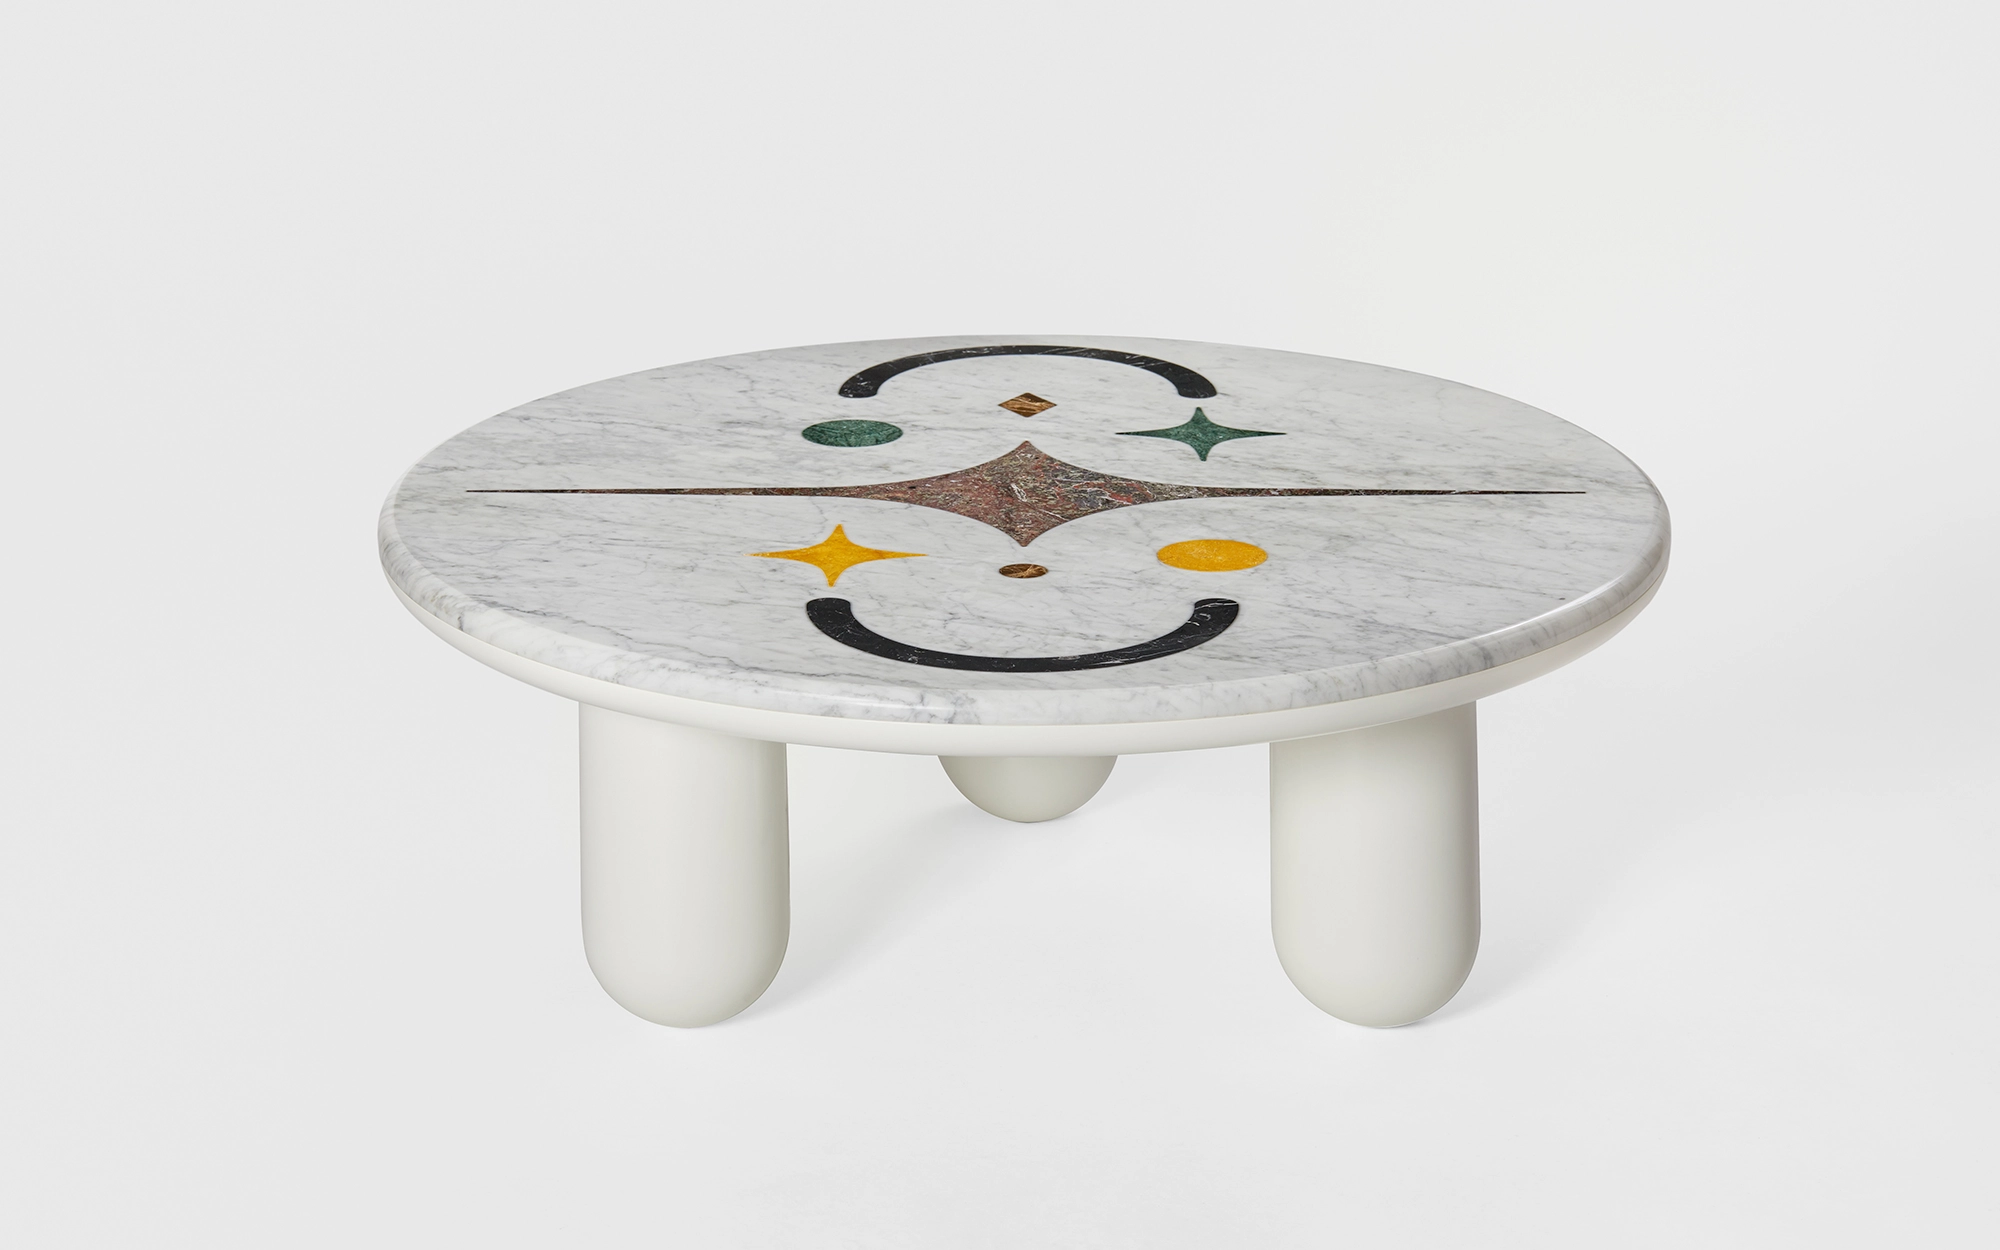 Hymy Round coffee table - Multicolored - Jaime Hayon - Design Miami / Basel 2021.